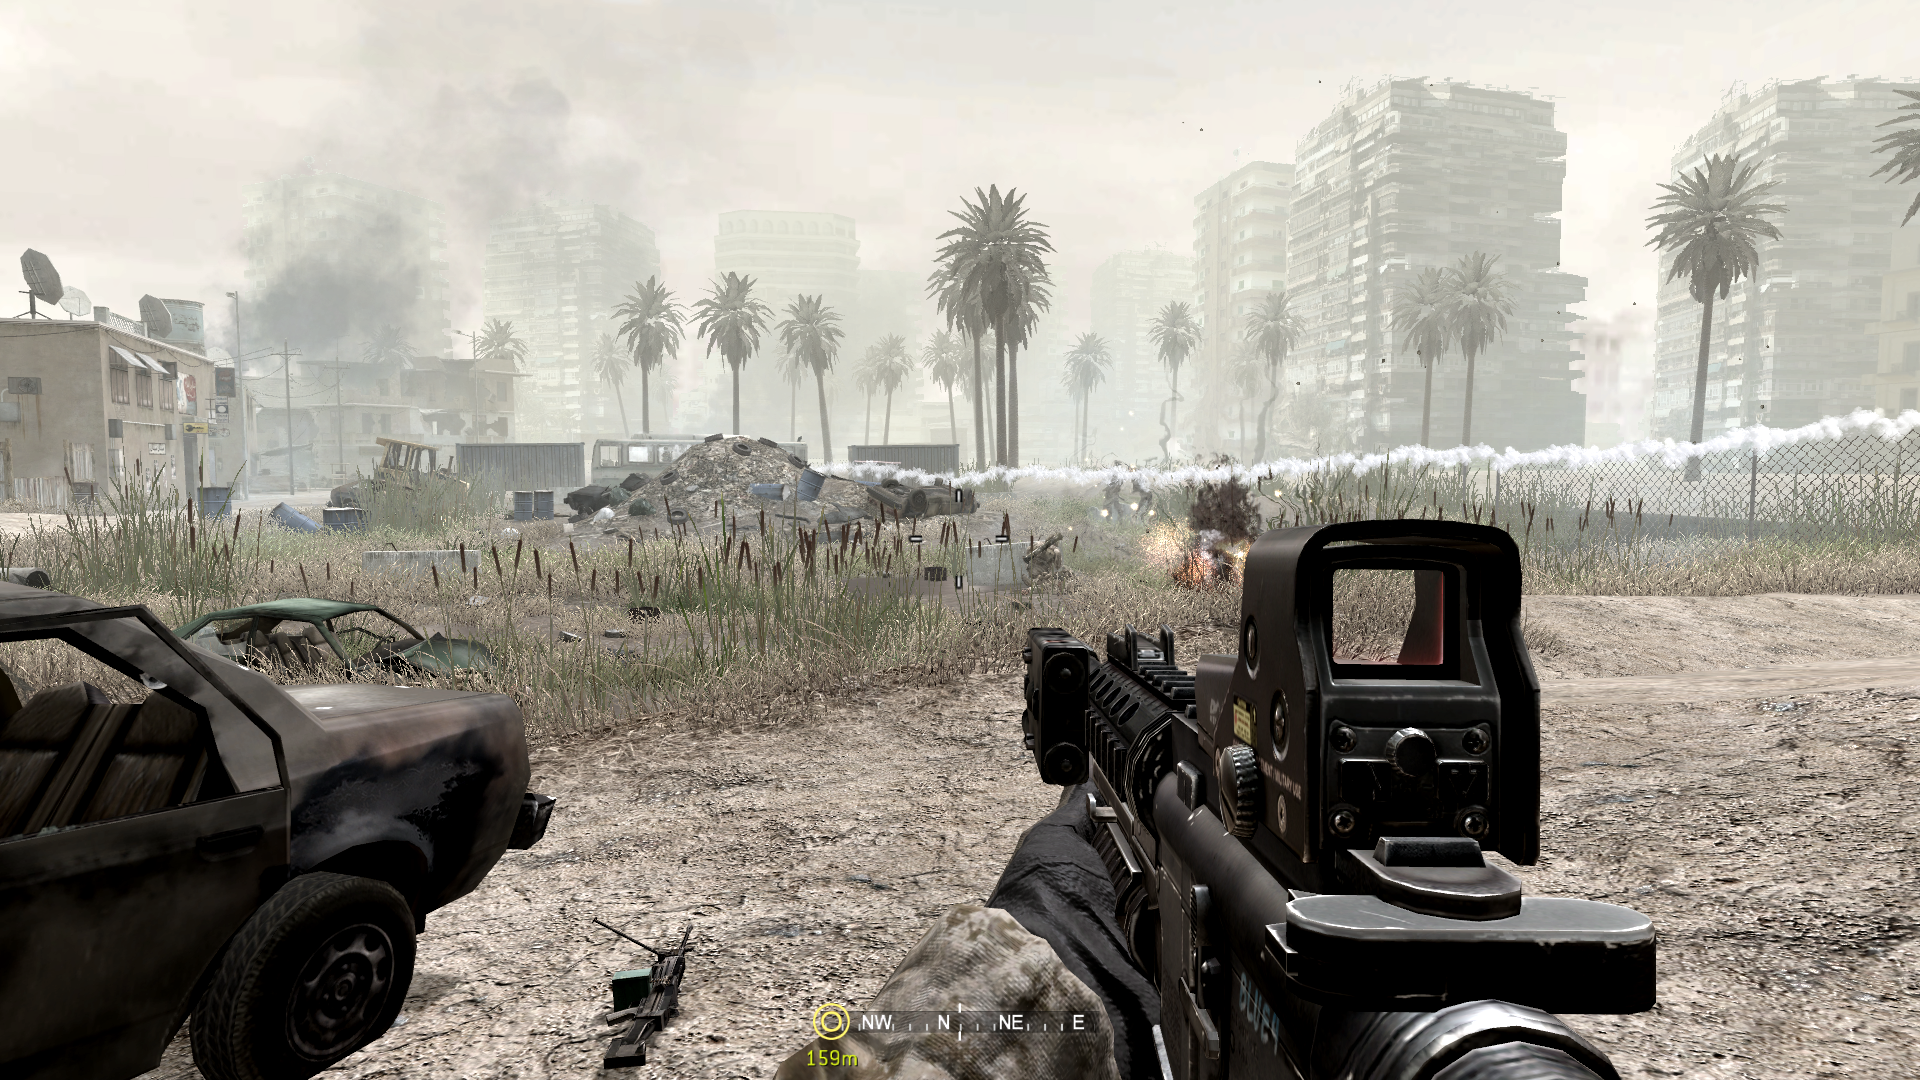 Modern Warfare 1. Call of Duty 4 Modern Warfare. Калл оф дьюти MW 1. Колоу дьюти 4 Модерн варфеир.